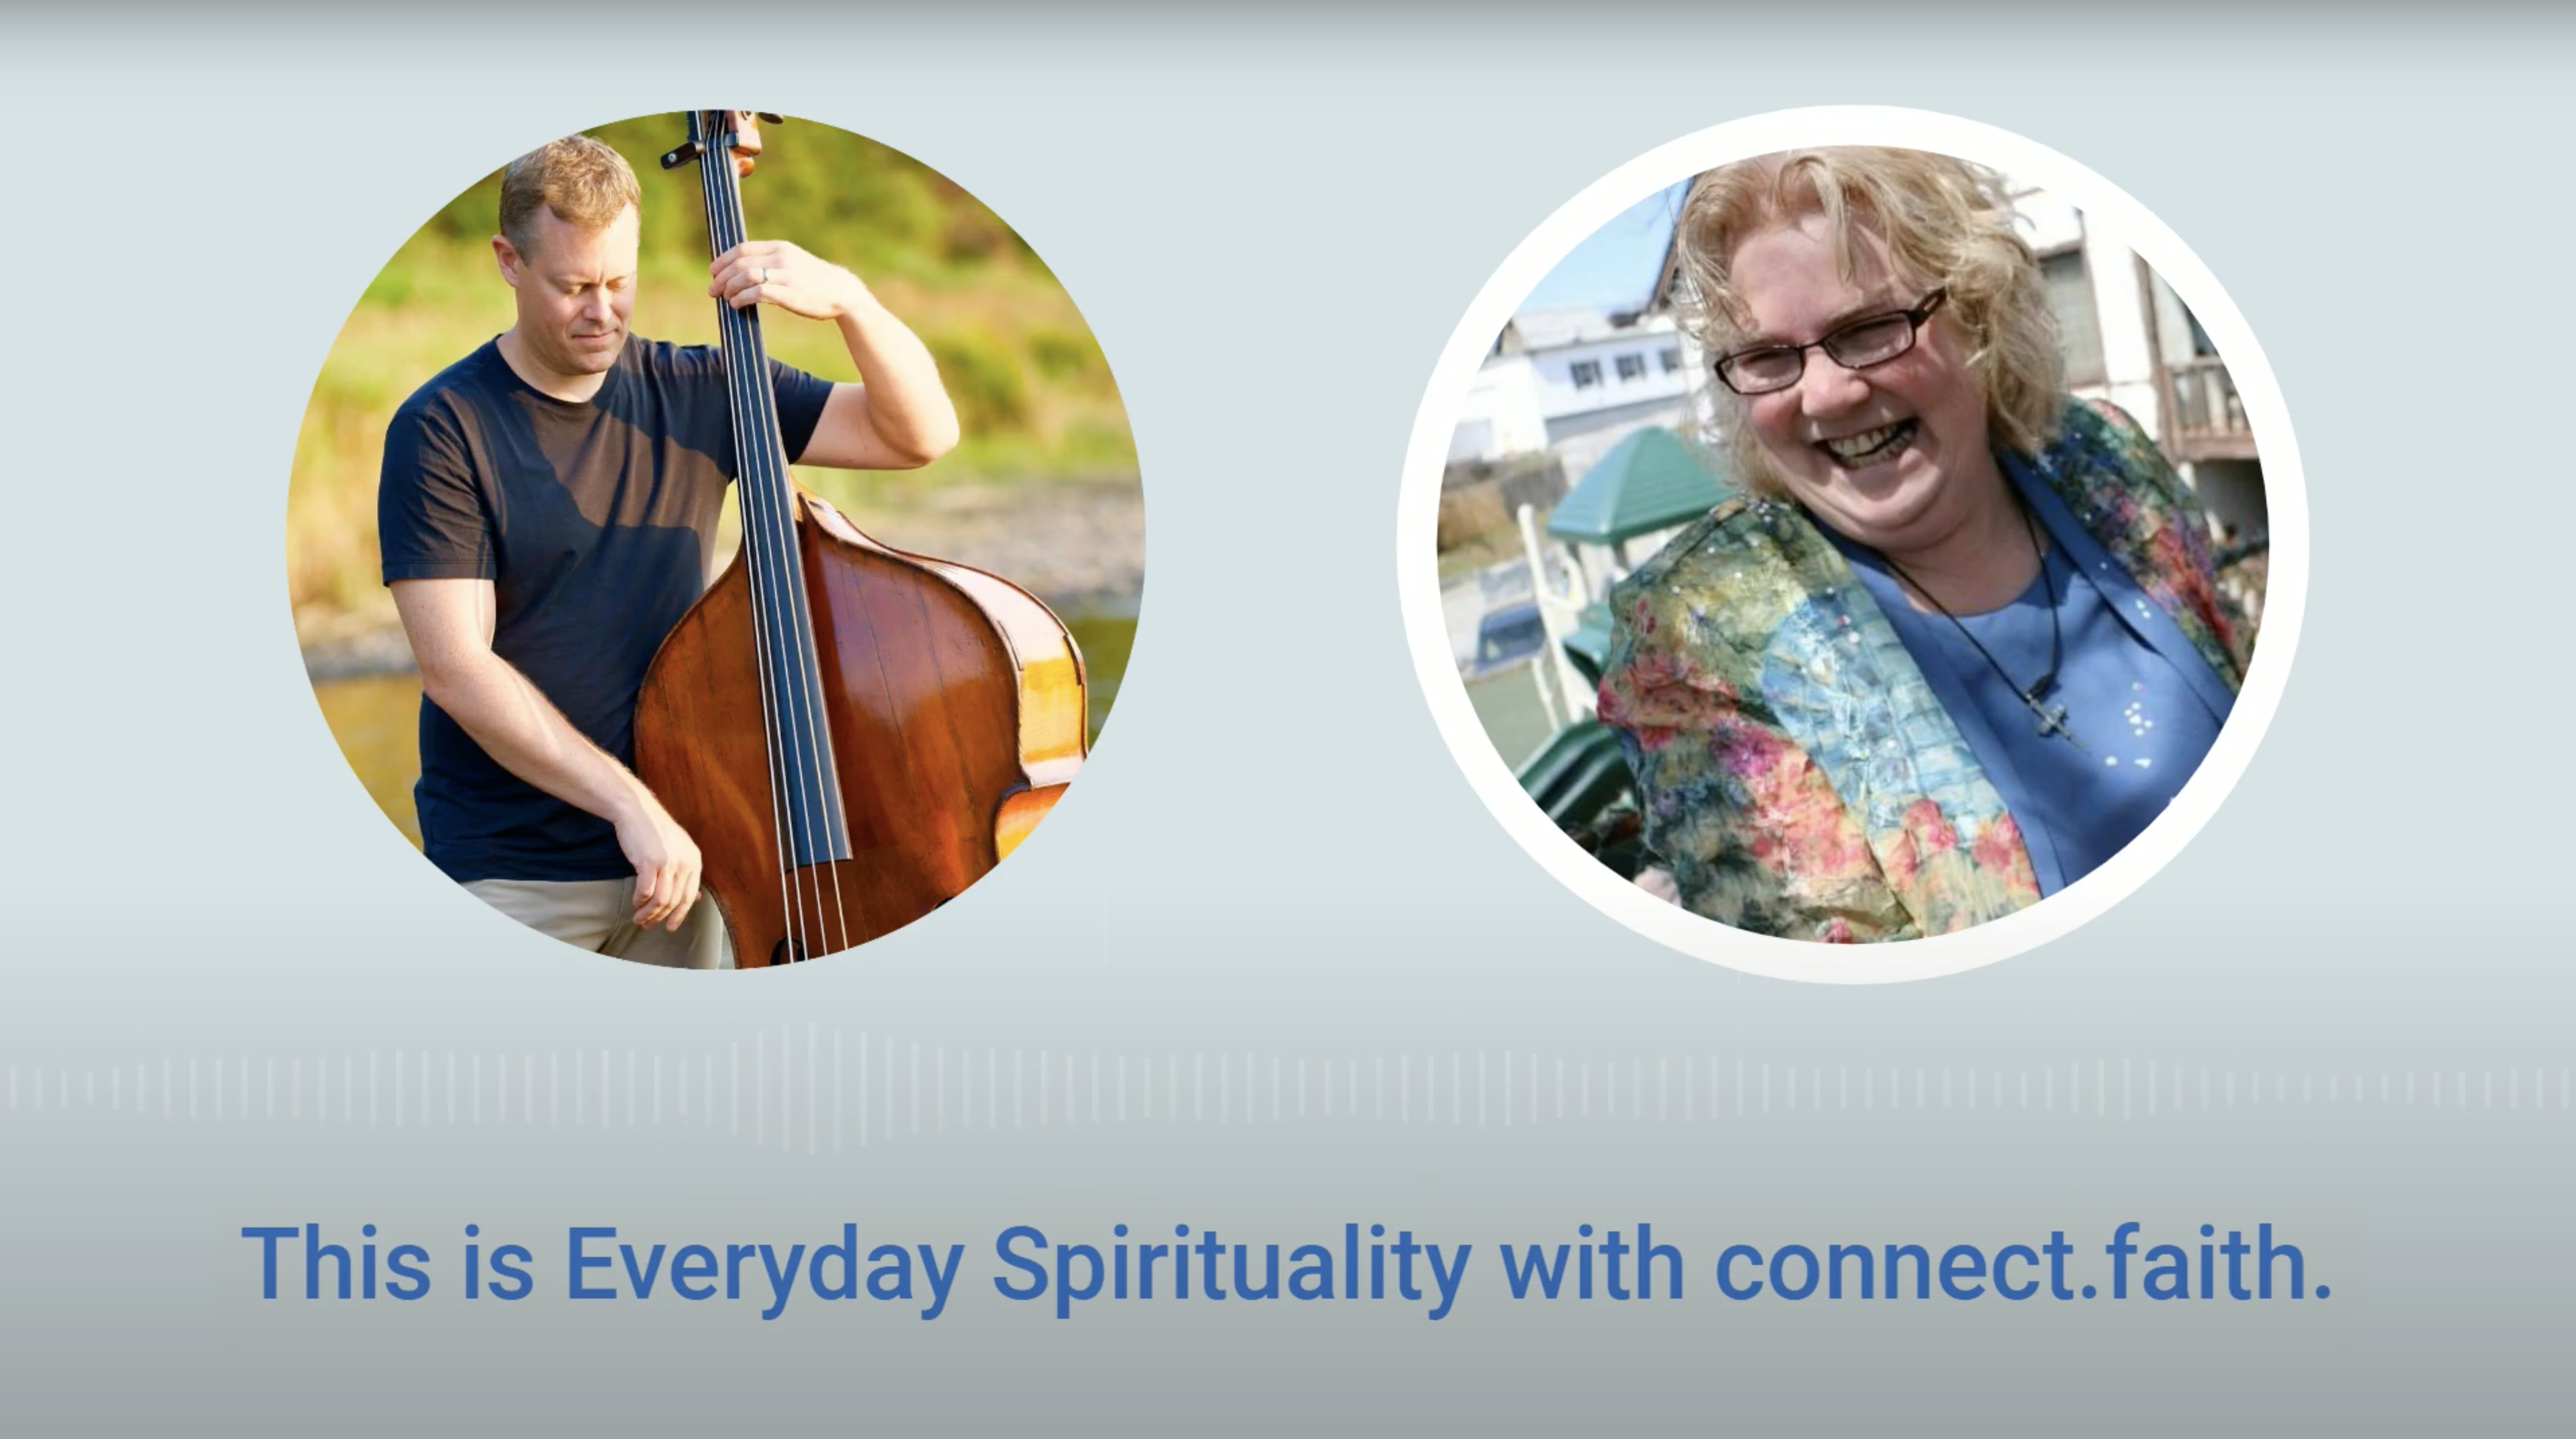 The Creative & Spiritual Process with Ike Sturm | Everyday Spirituality | connect.faith